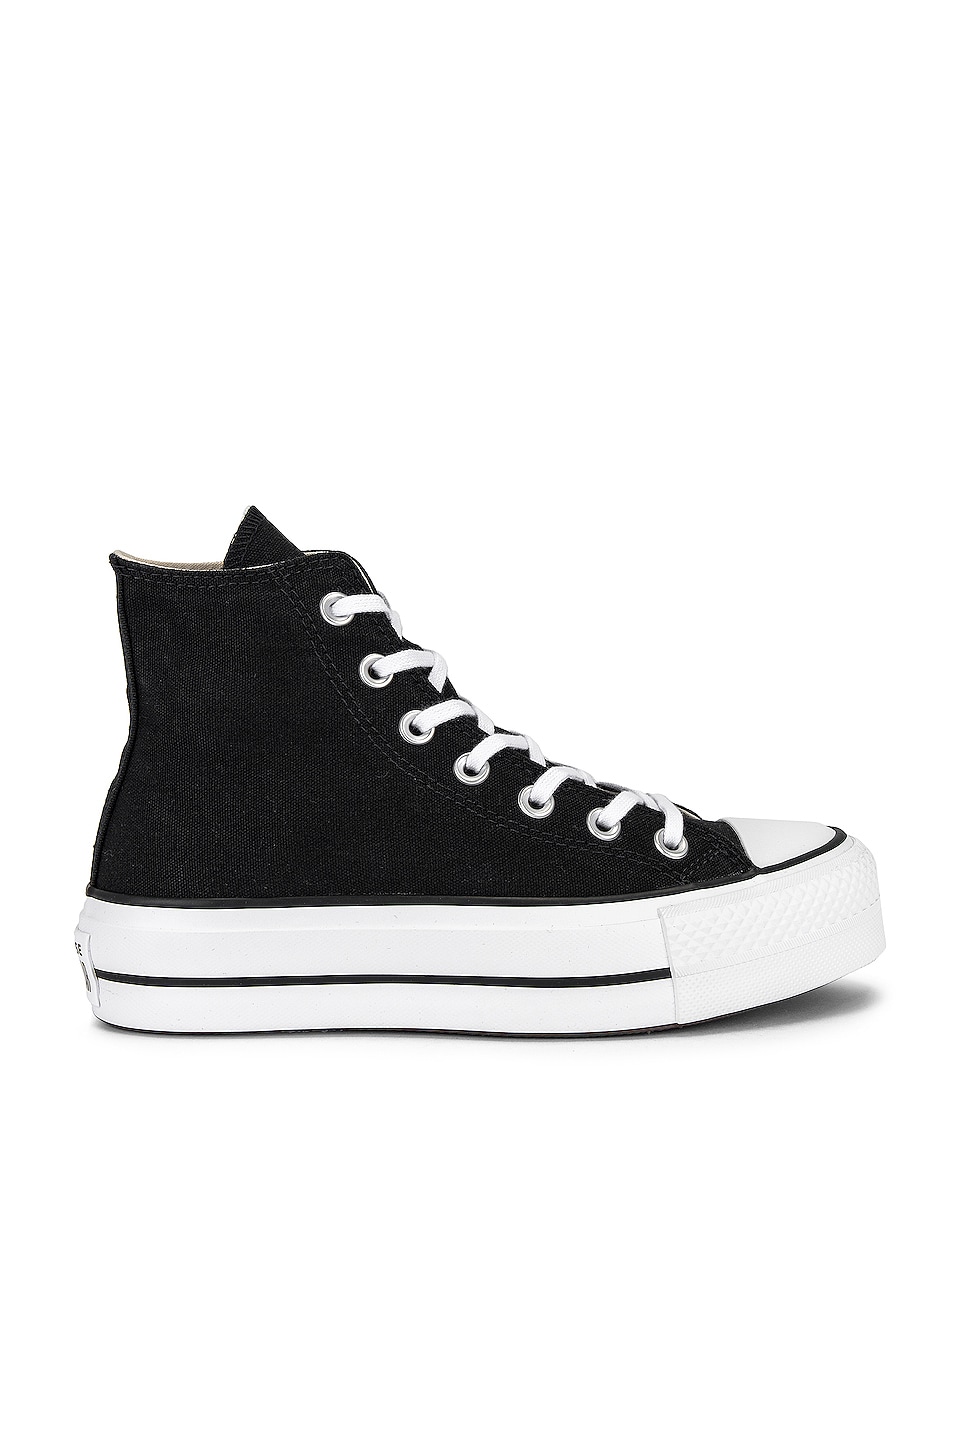 Converse Chuck Taylor All Star Lift Hi Sneaker in Black & White | REVOLVE